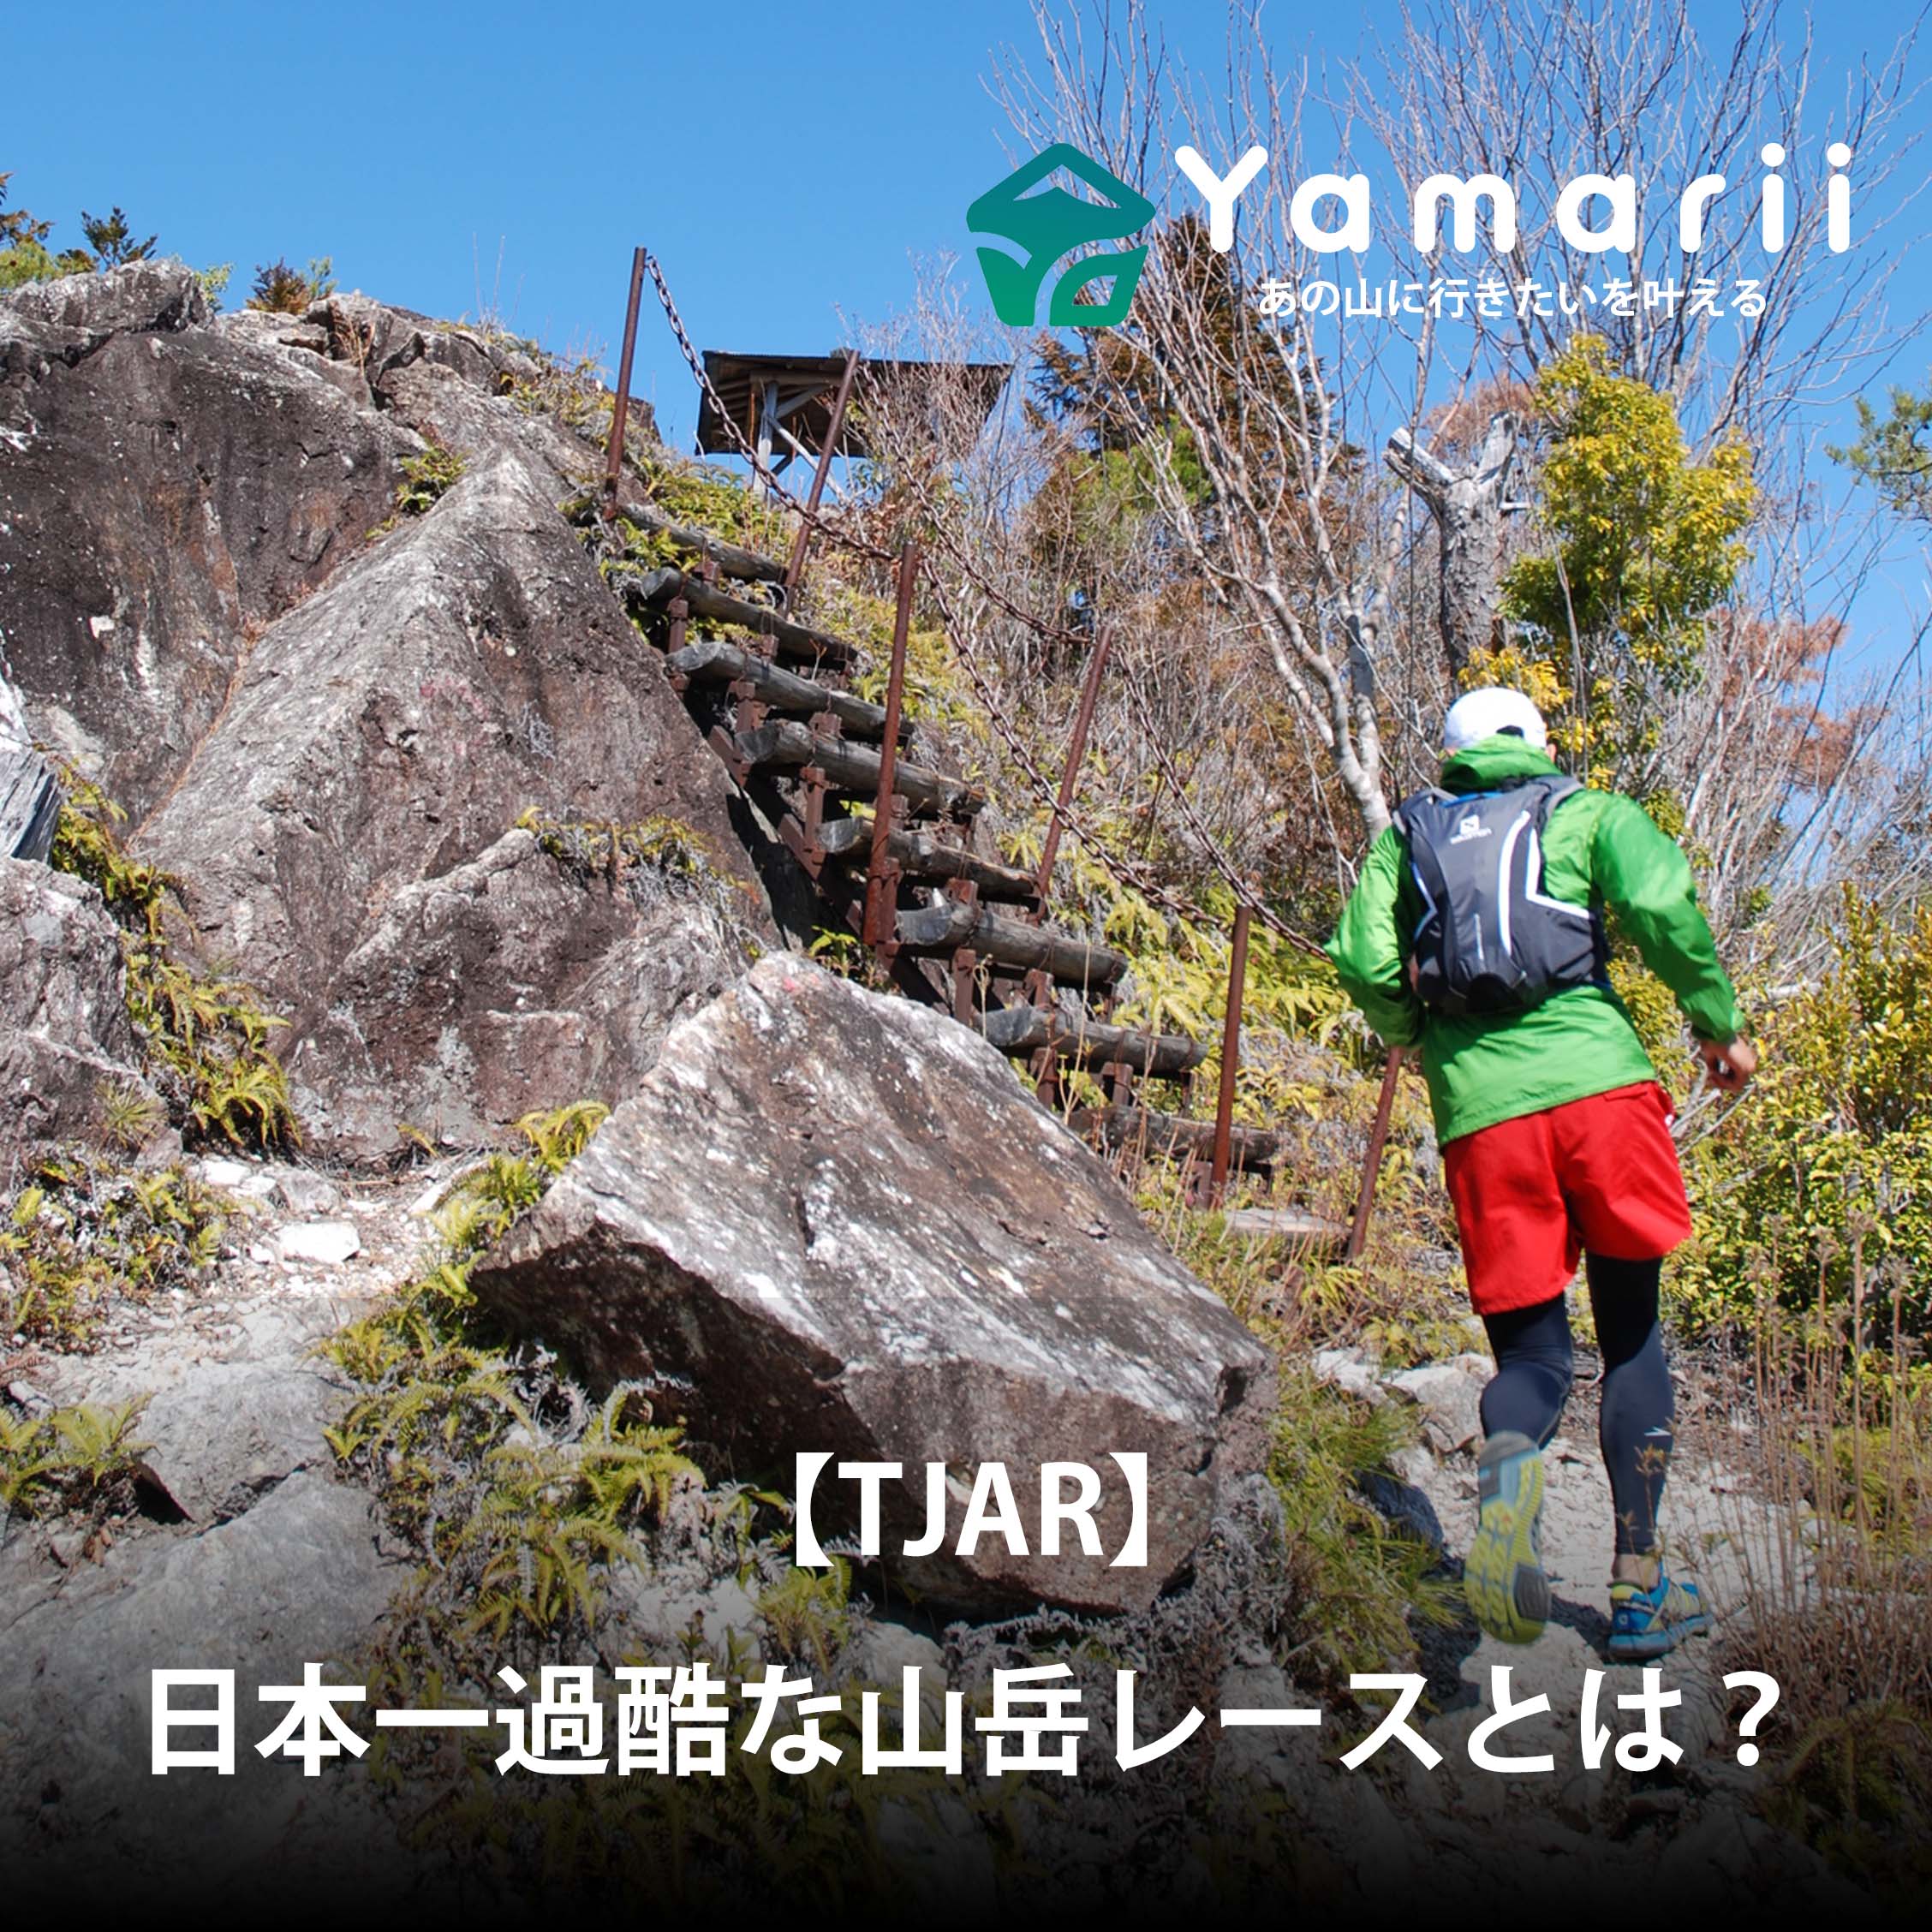 【TJAR】全てが自己対応、そして孤独の世界。日本一過酷な山岳レースとは？